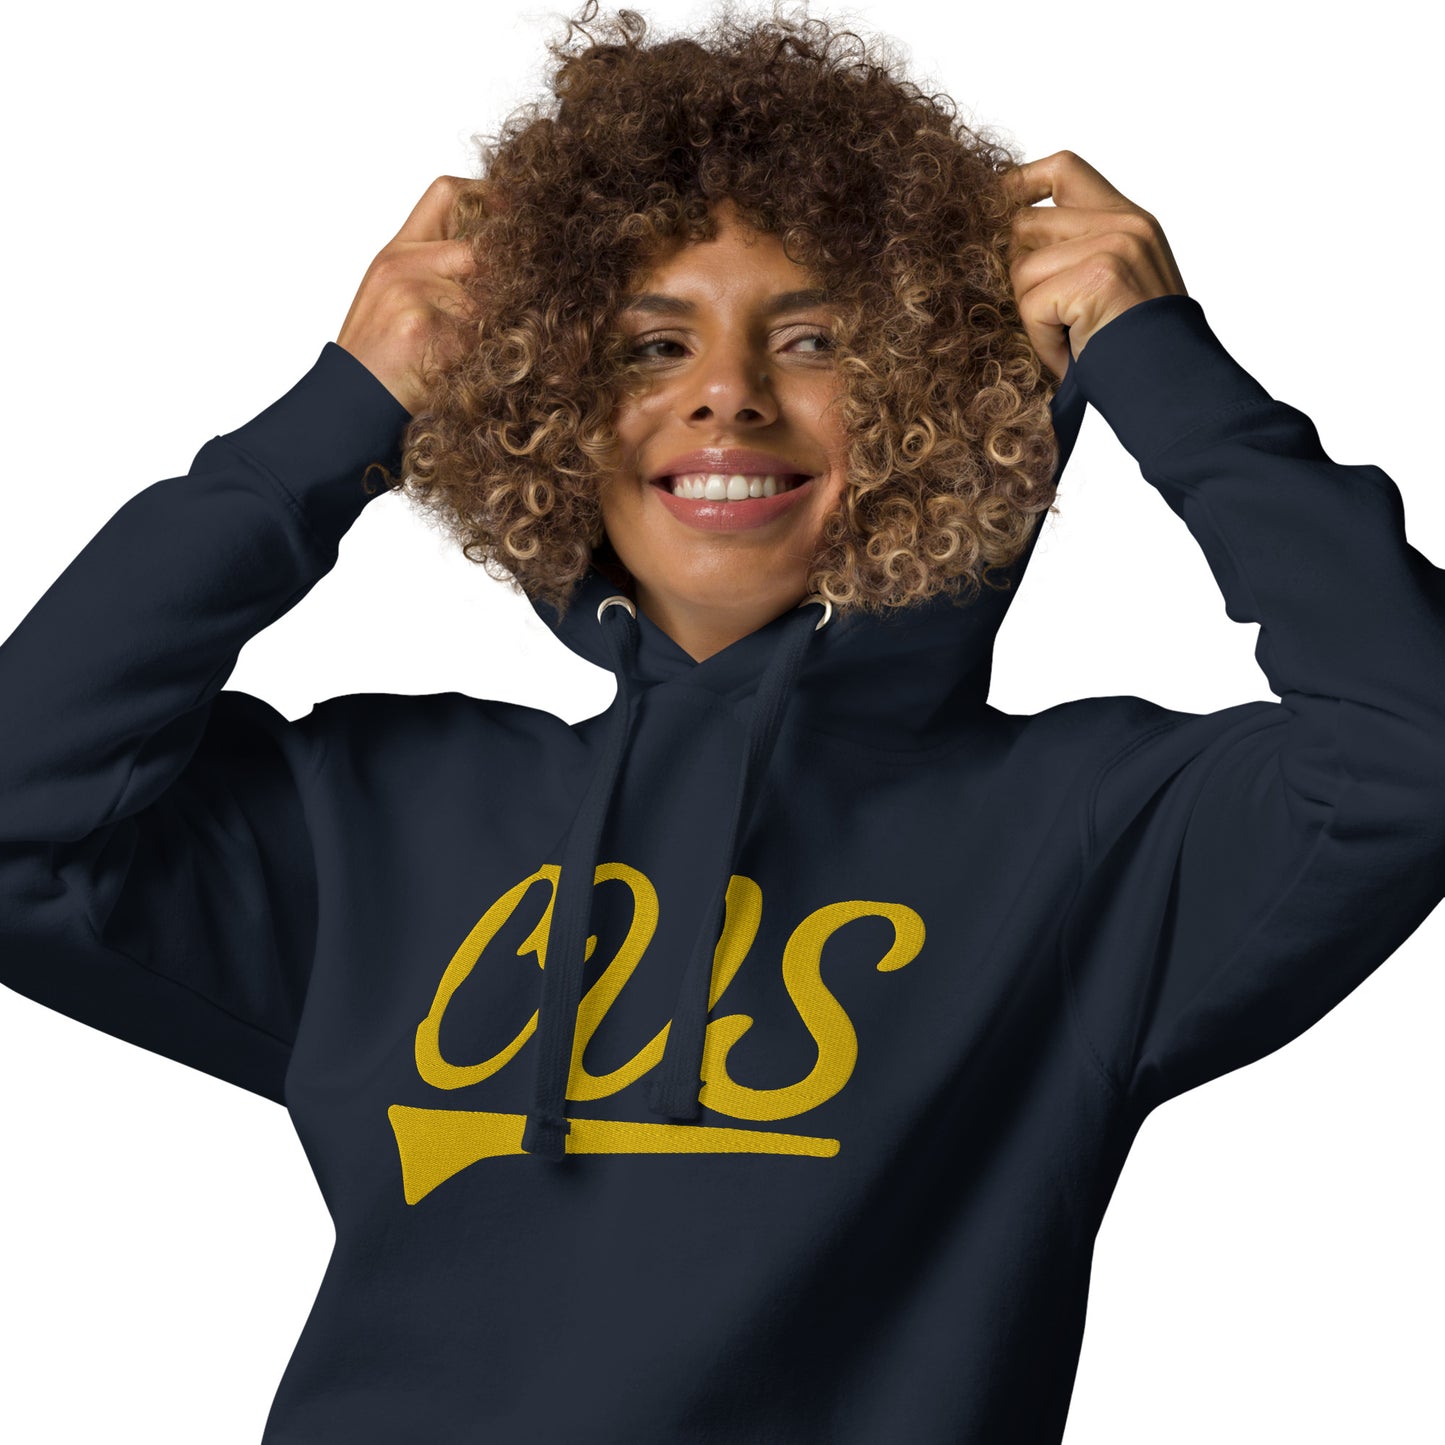 Embroidered CVS Hoodie | CVS Cavaliers